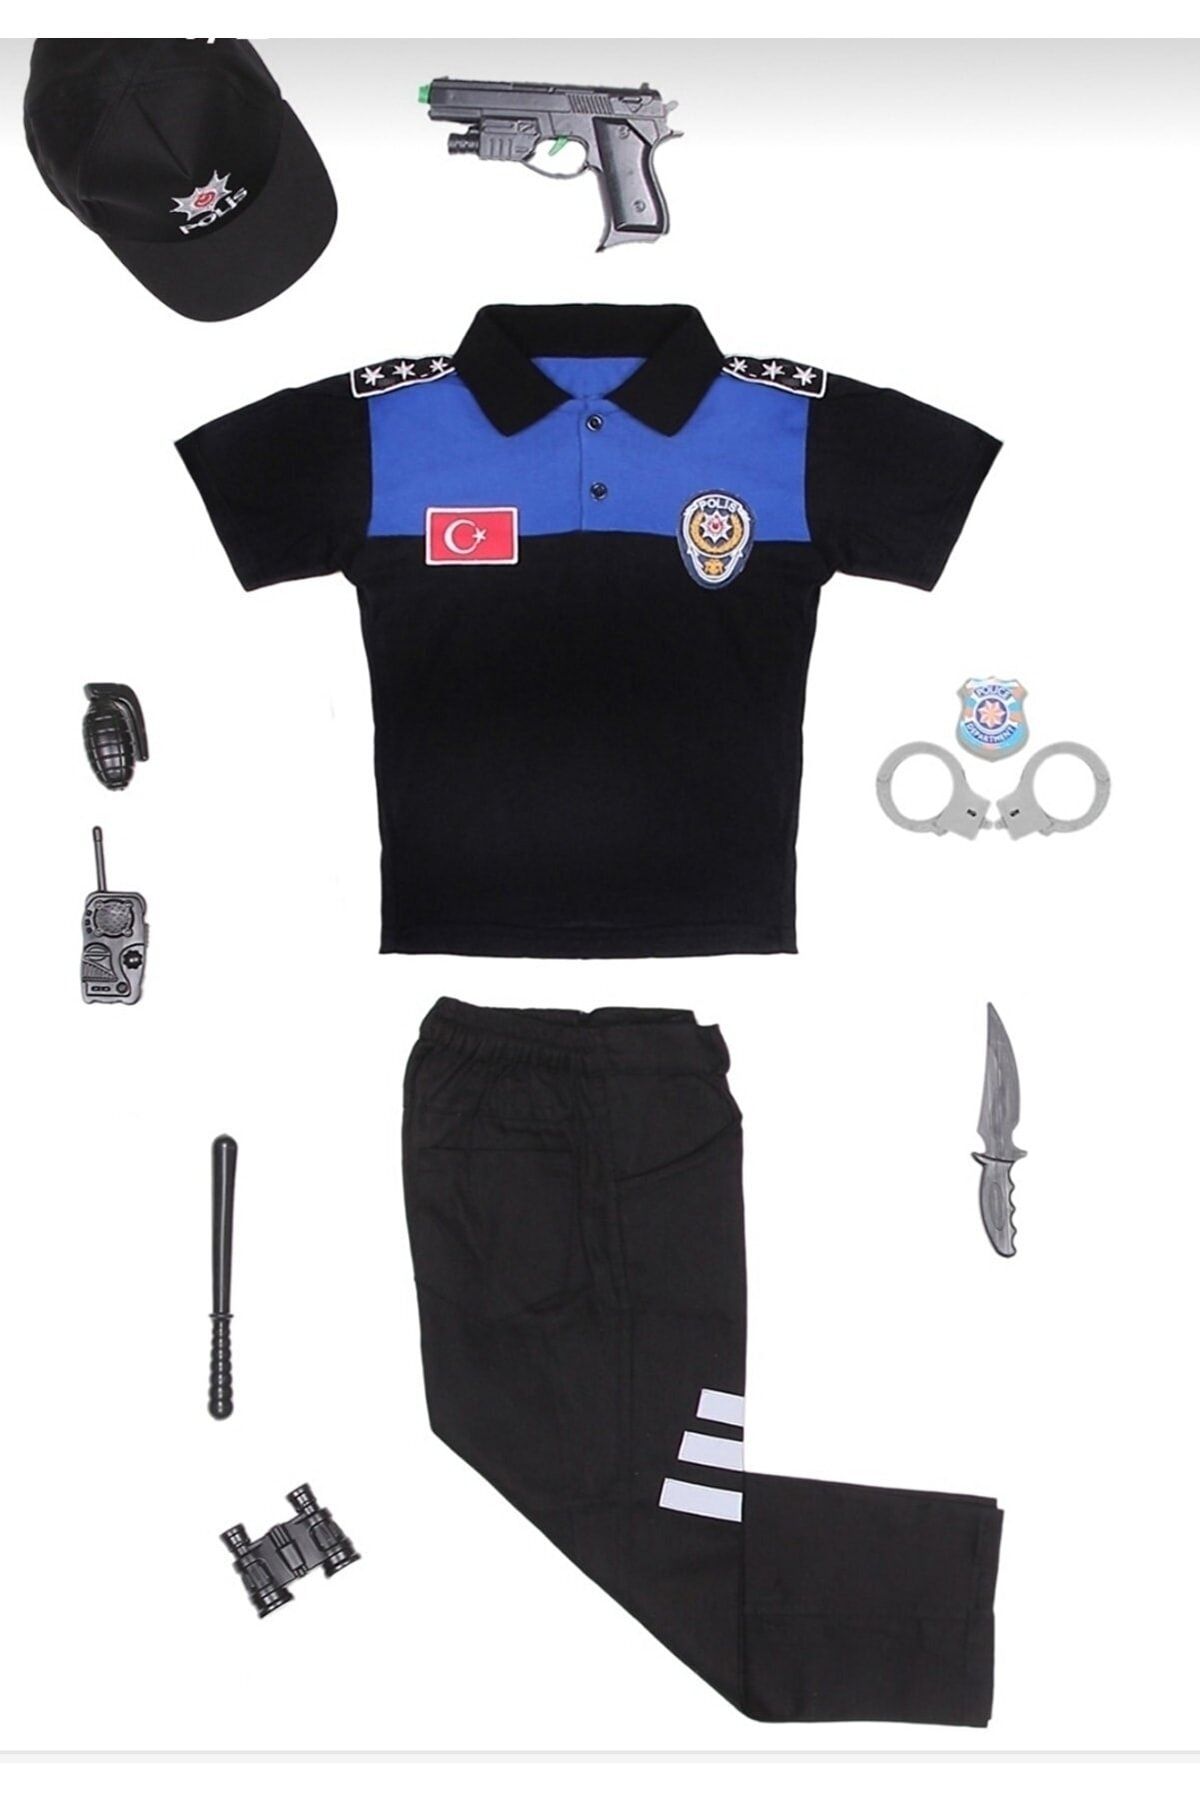 NOBLE STORE Çocuk Polis Kıyafetleri Polo Yaka